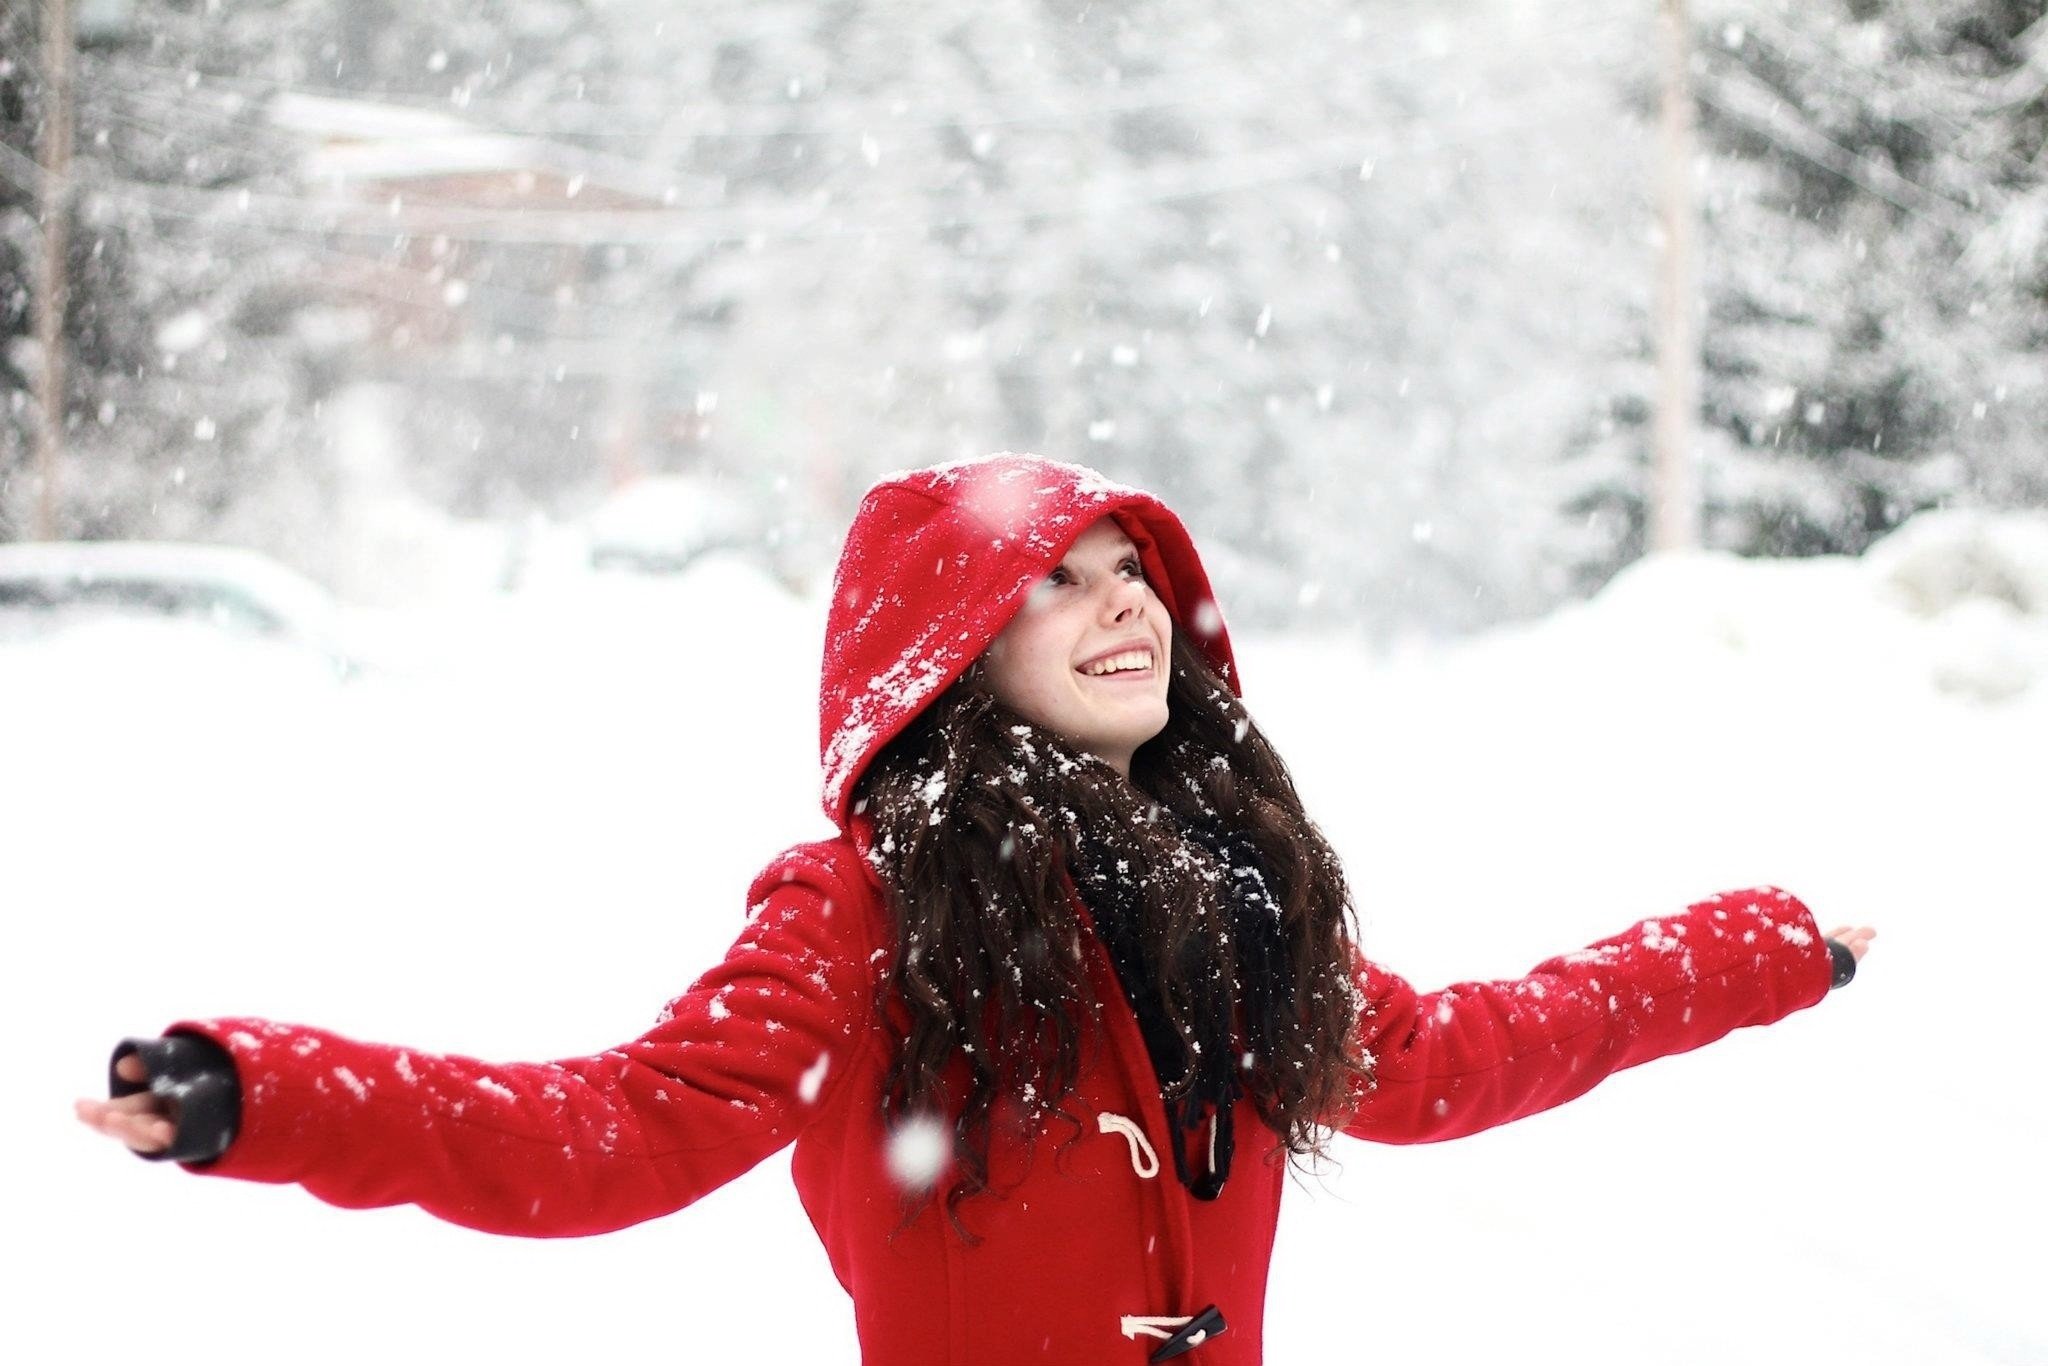 Ню фото девушек на снегу зима (31 фото)